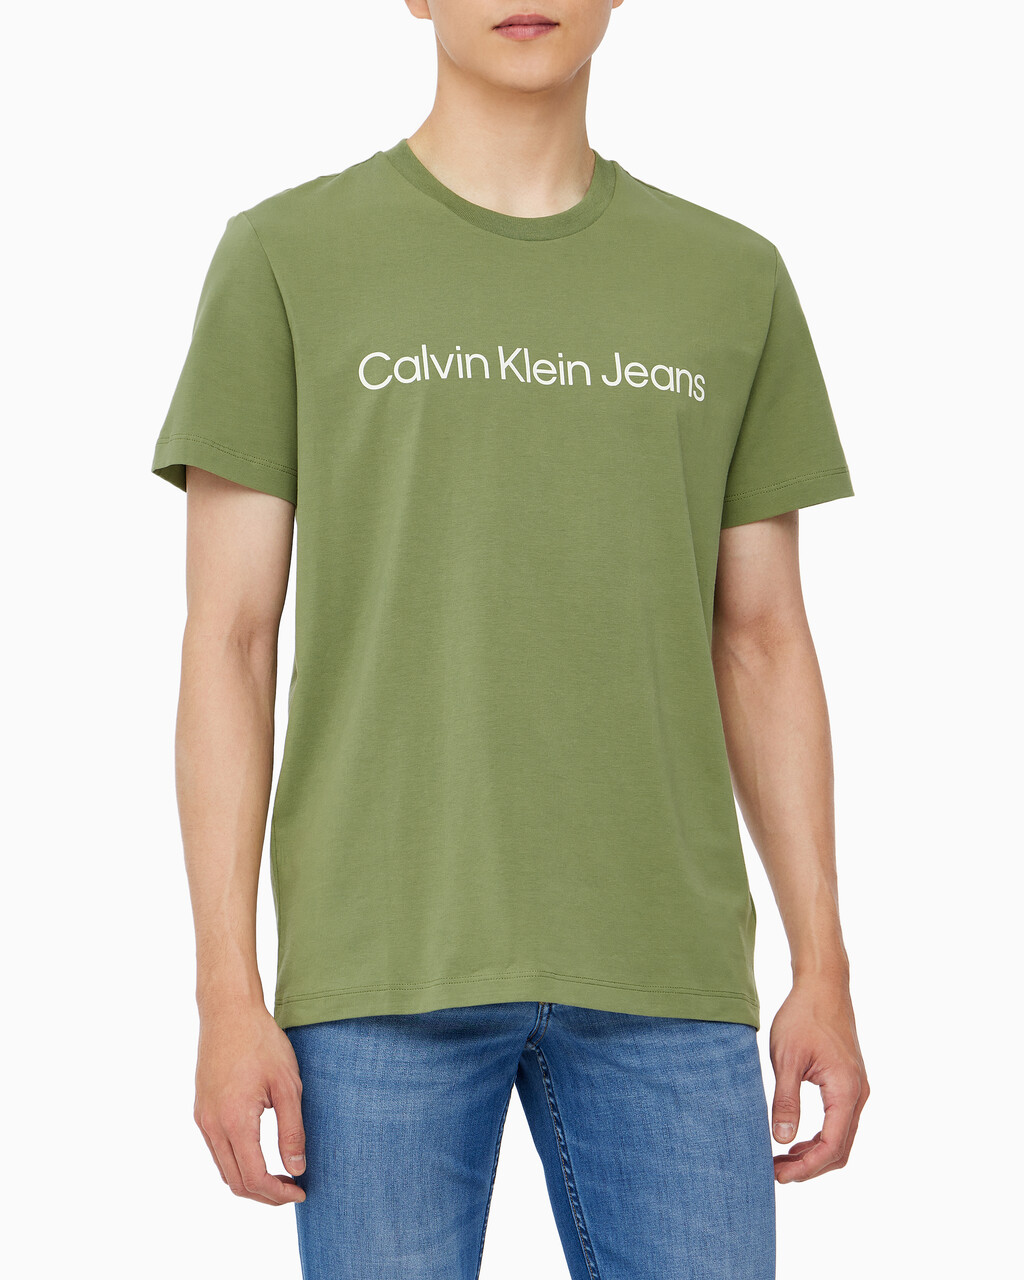 Buy 남성 레귤러핏 인스티튜셔널 로고 스트레치 반팔 티셔츠  in color KHAKI